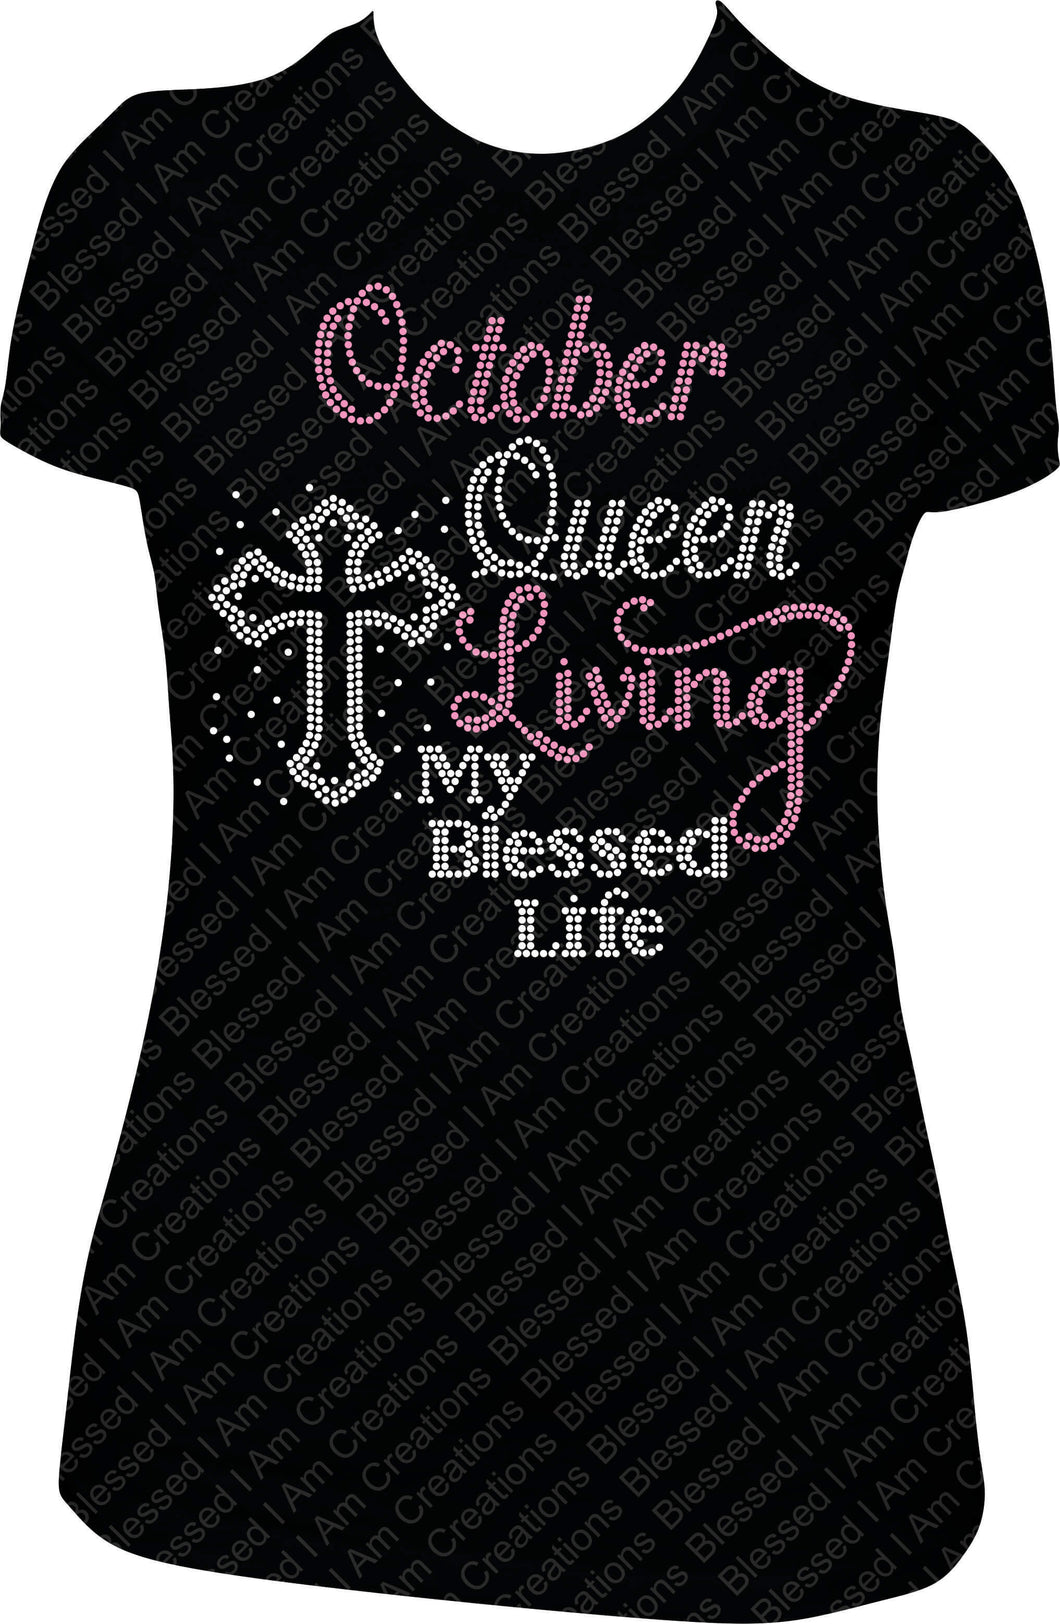 October Queen Living My Blessed Life Cross Rhinestone Birthday Shirt